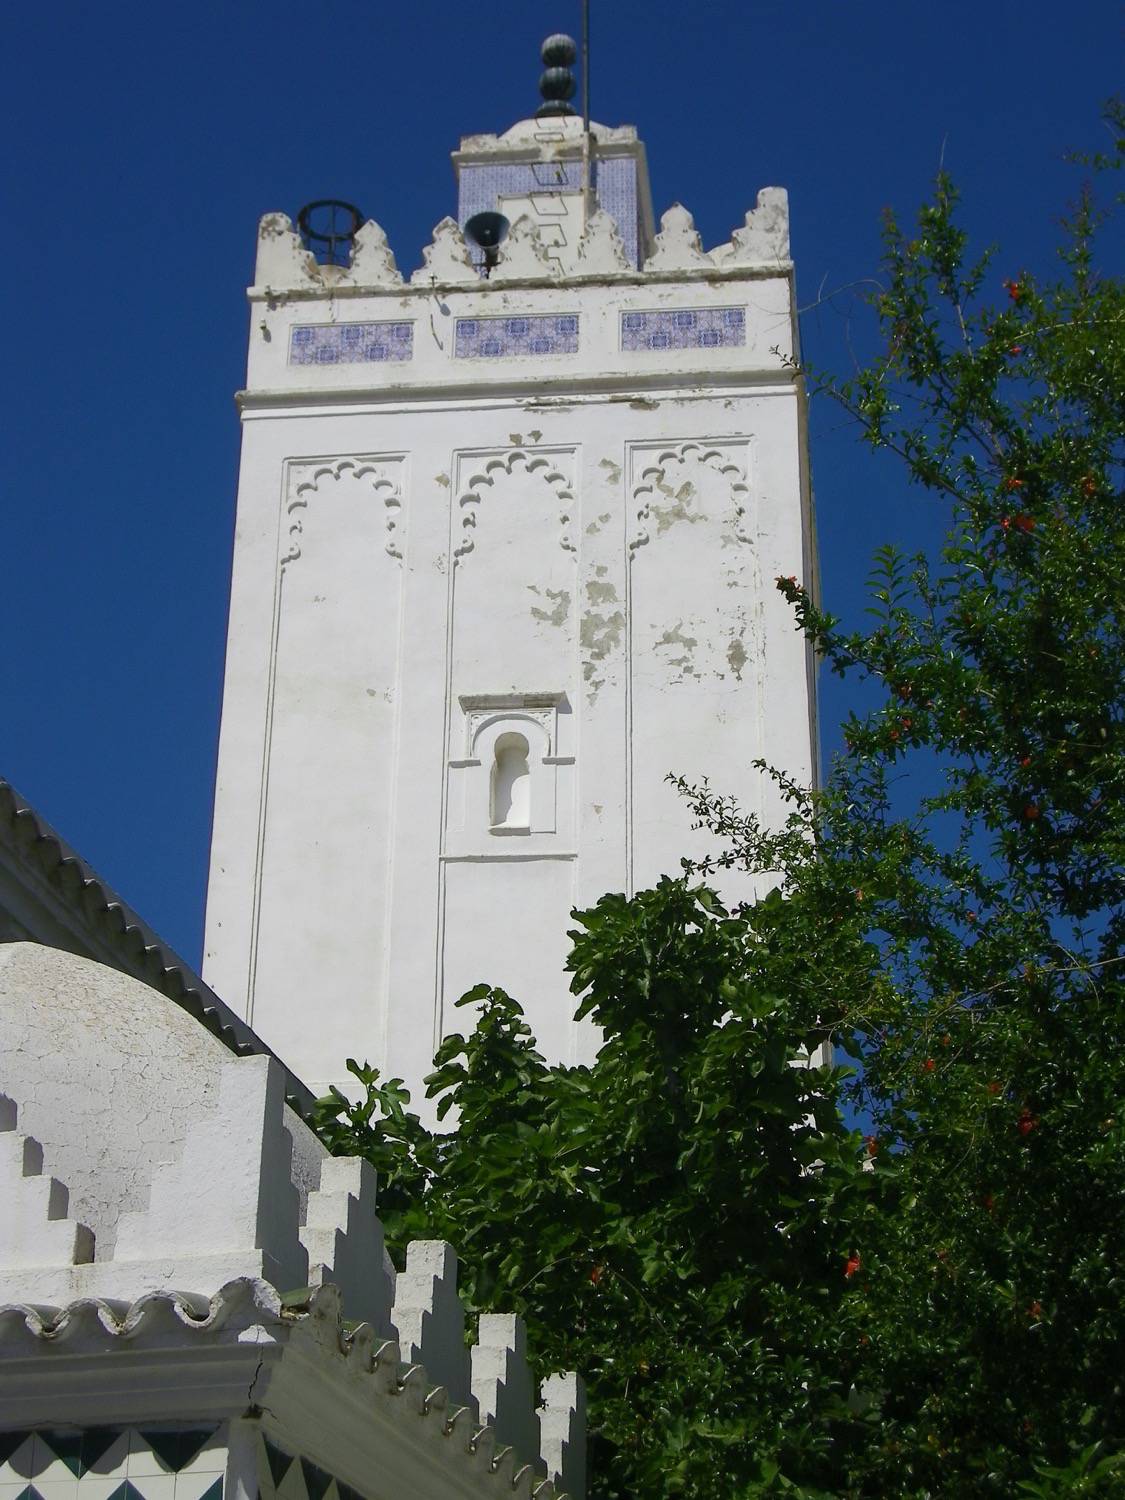 Exterior, upward view of the minaret